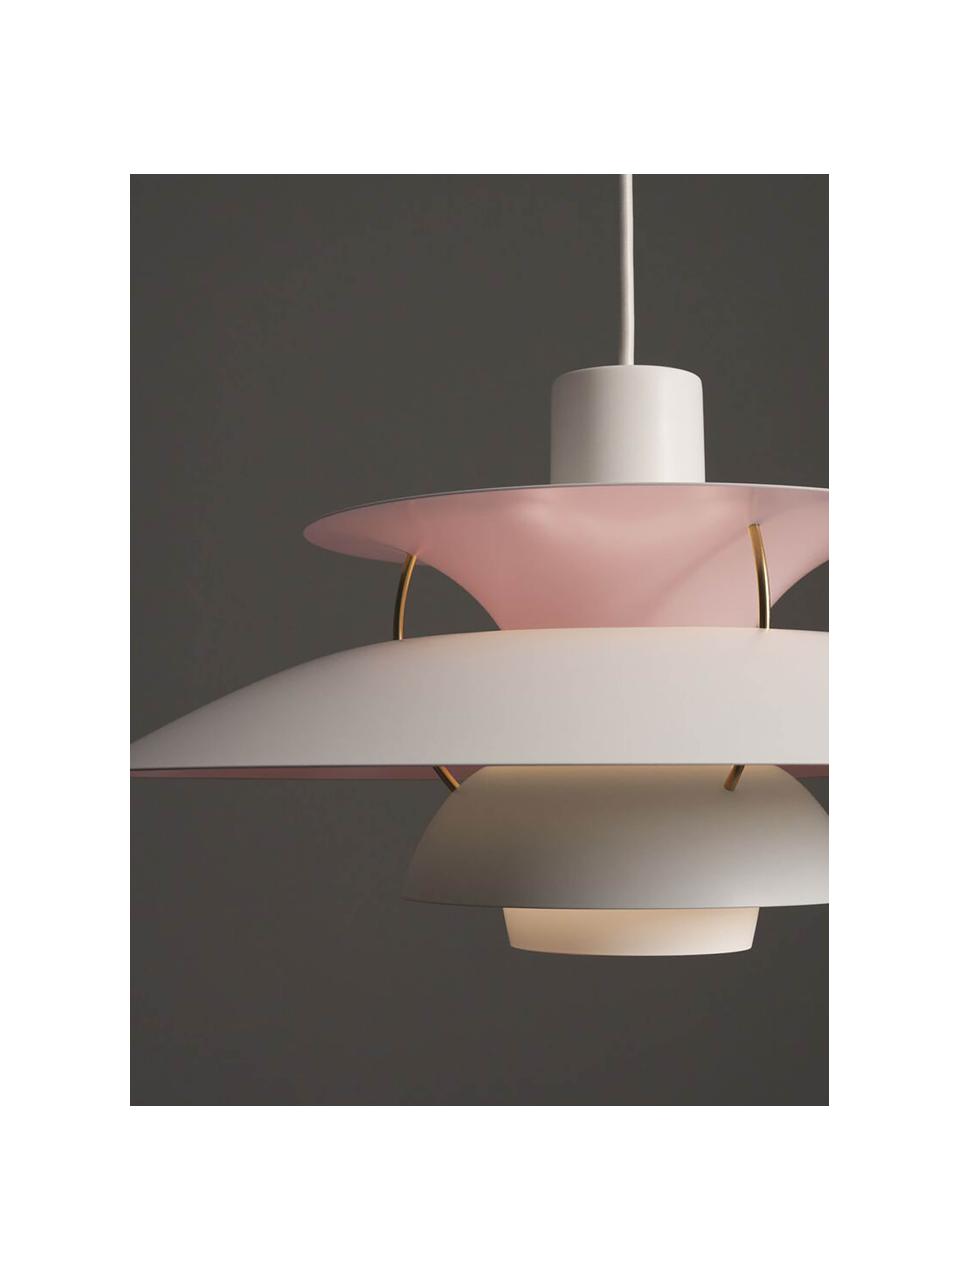 Hanglamp PH 5, Lampenkap: gecoat metaal, Diffuser: glas, semi-transparant, Wit, lichtroze, Ø 50 x H 27 cm